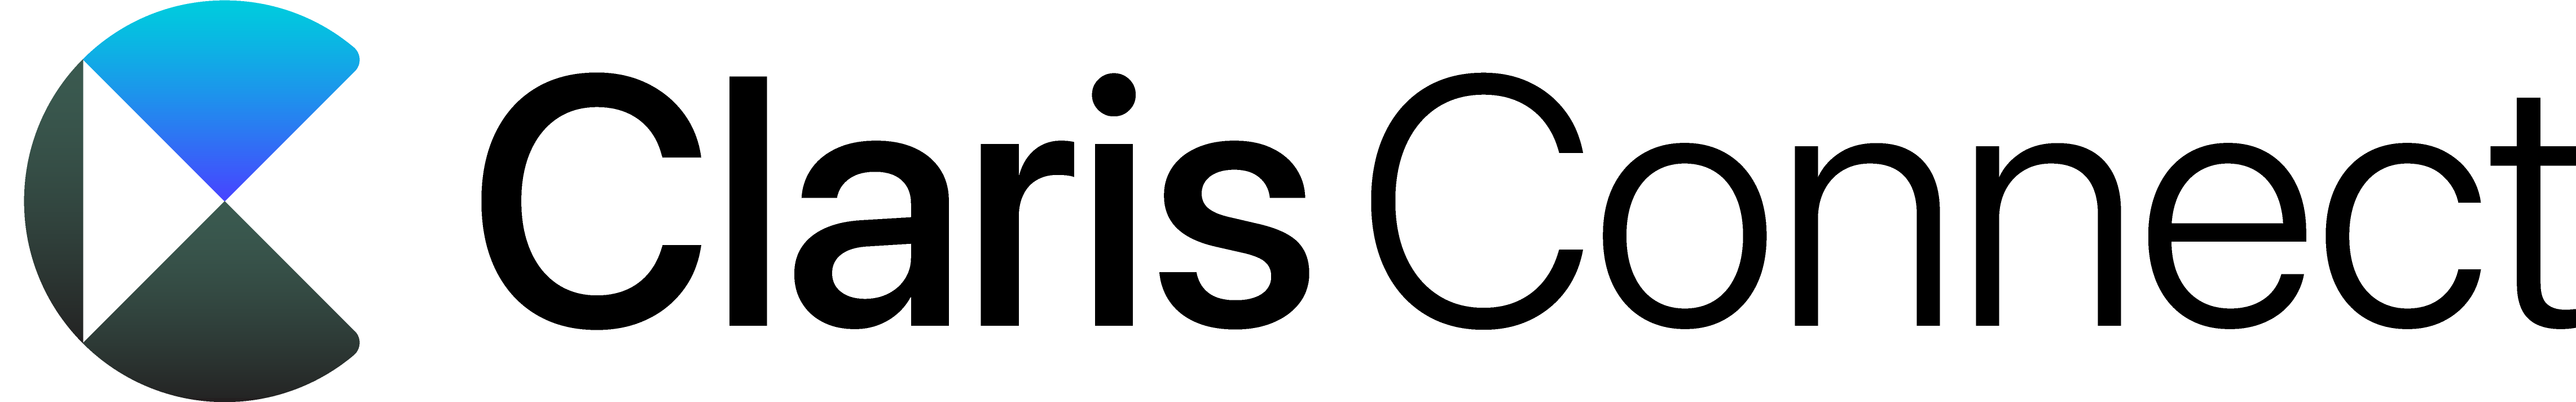 Claris Connect logo